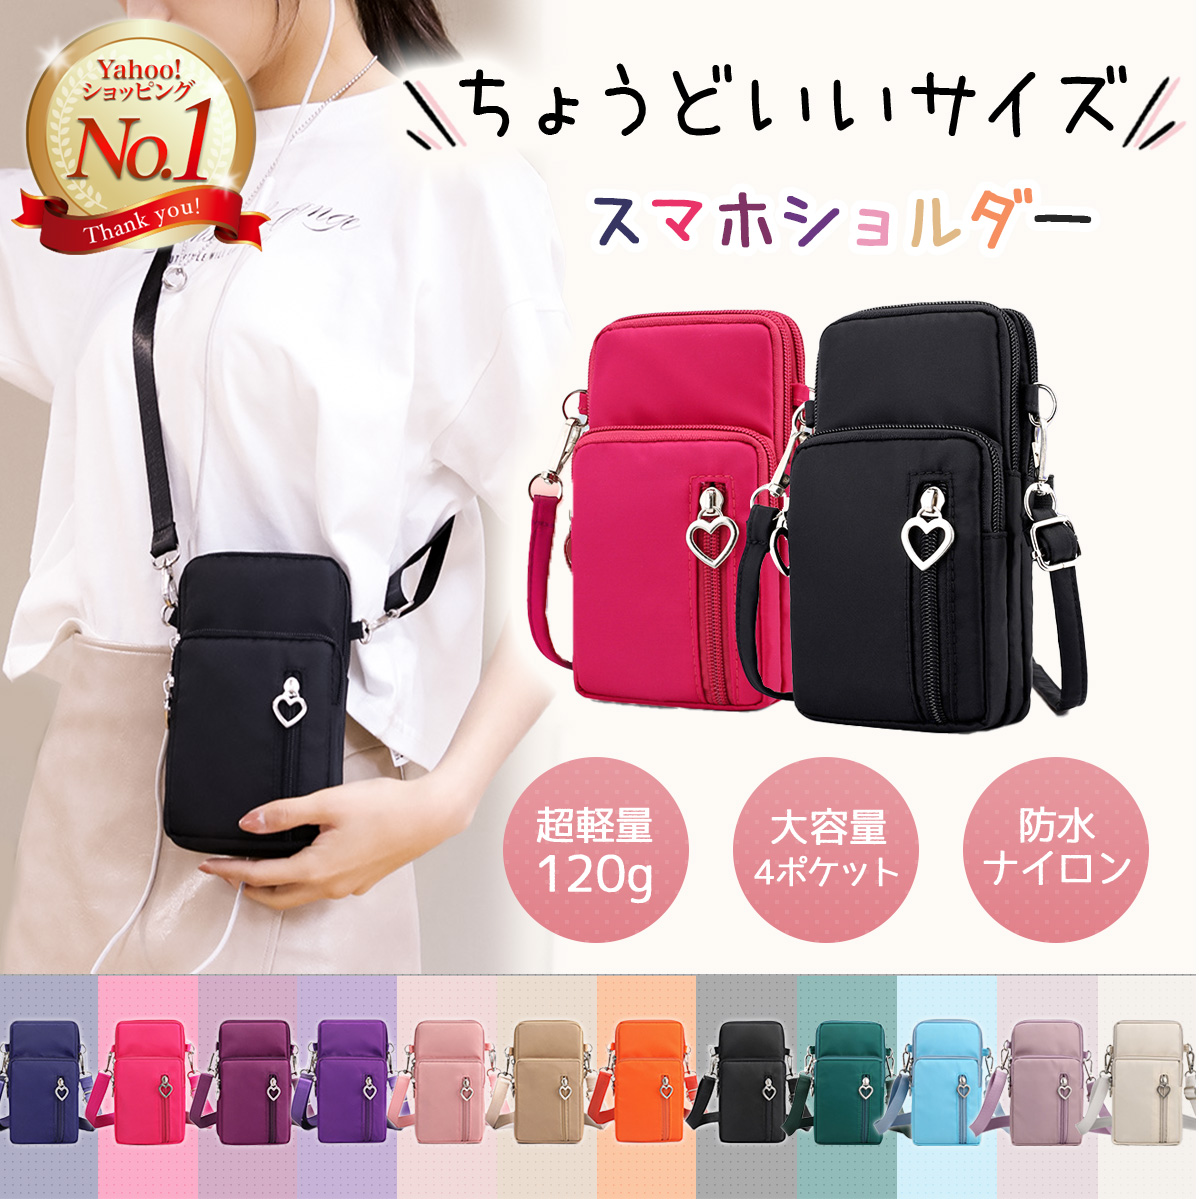  смартфон сумка смартфон небольшая сумочка смартфон сумка на плечо сумка женский смартфон сумка 